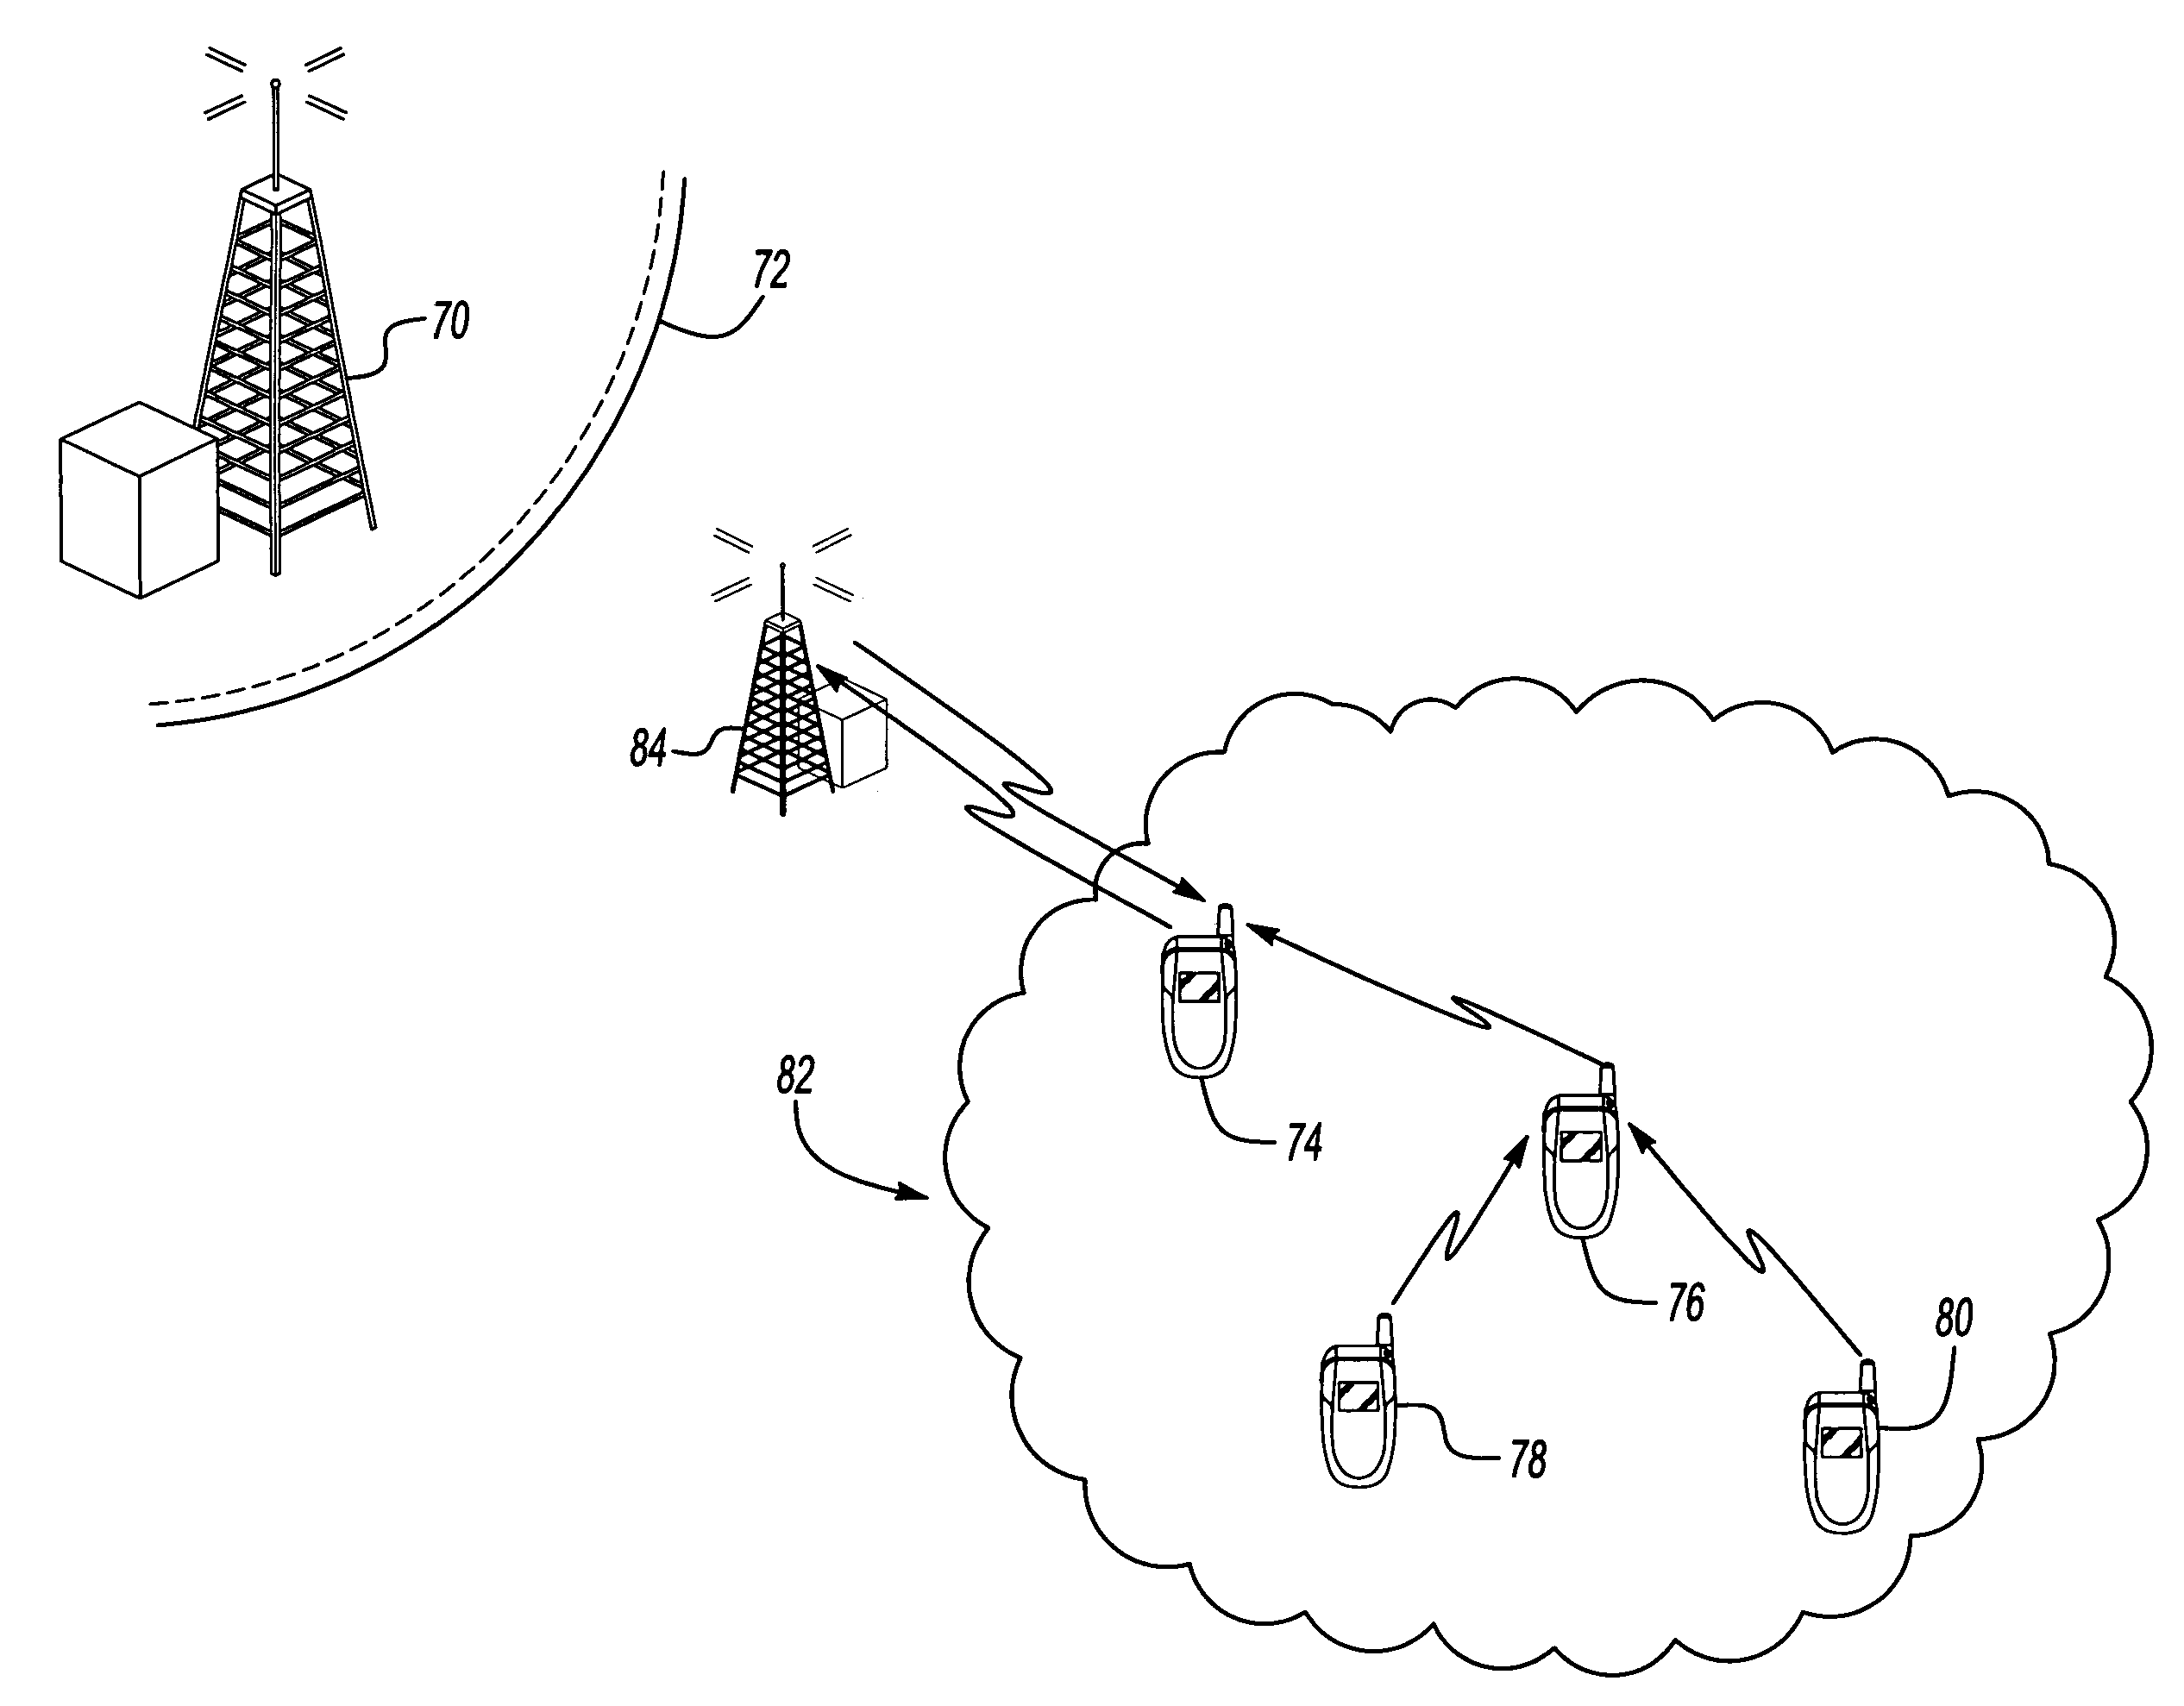 Emergency mode operation in a wireless communication network